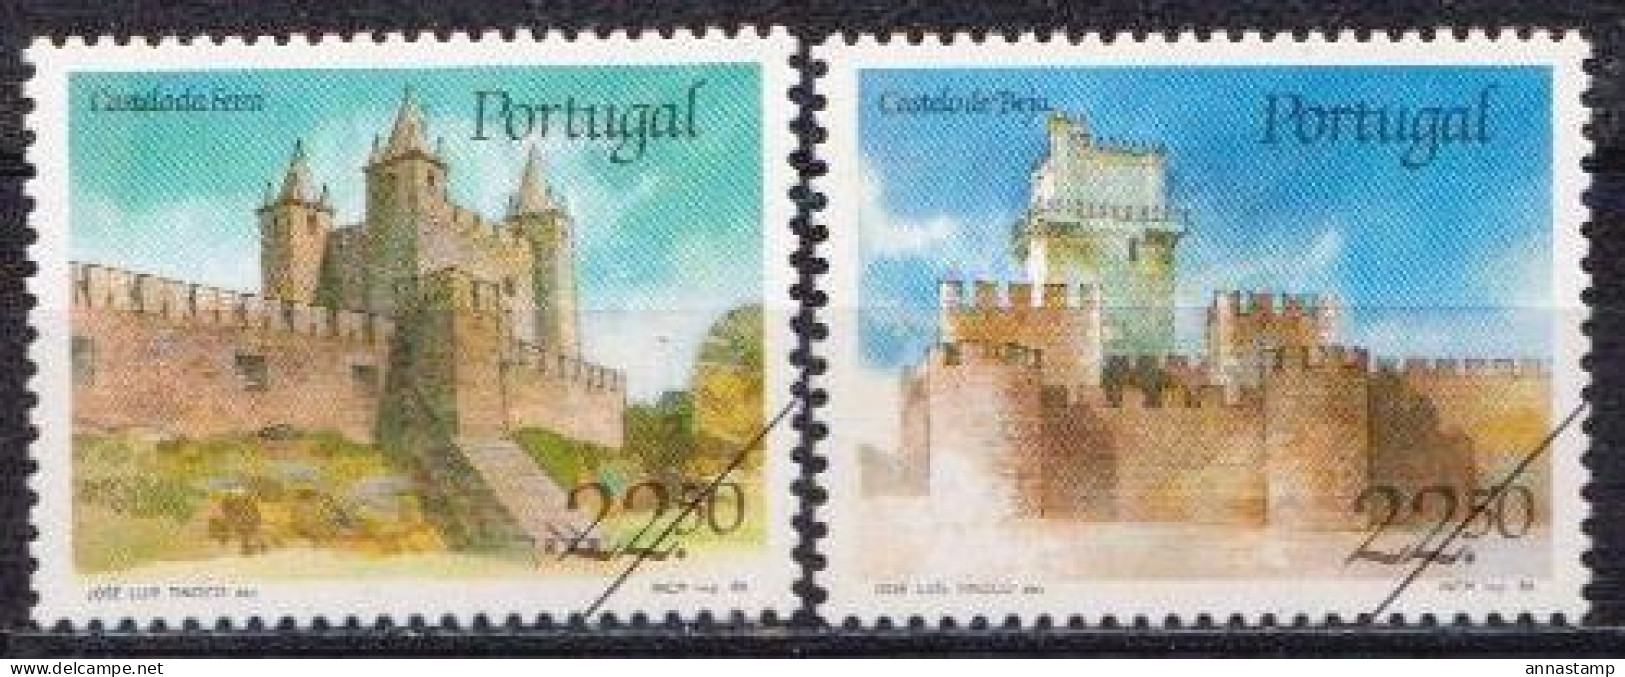 Portugal MNH Stamps, SPECIMEN - Schlösser U. Burgen